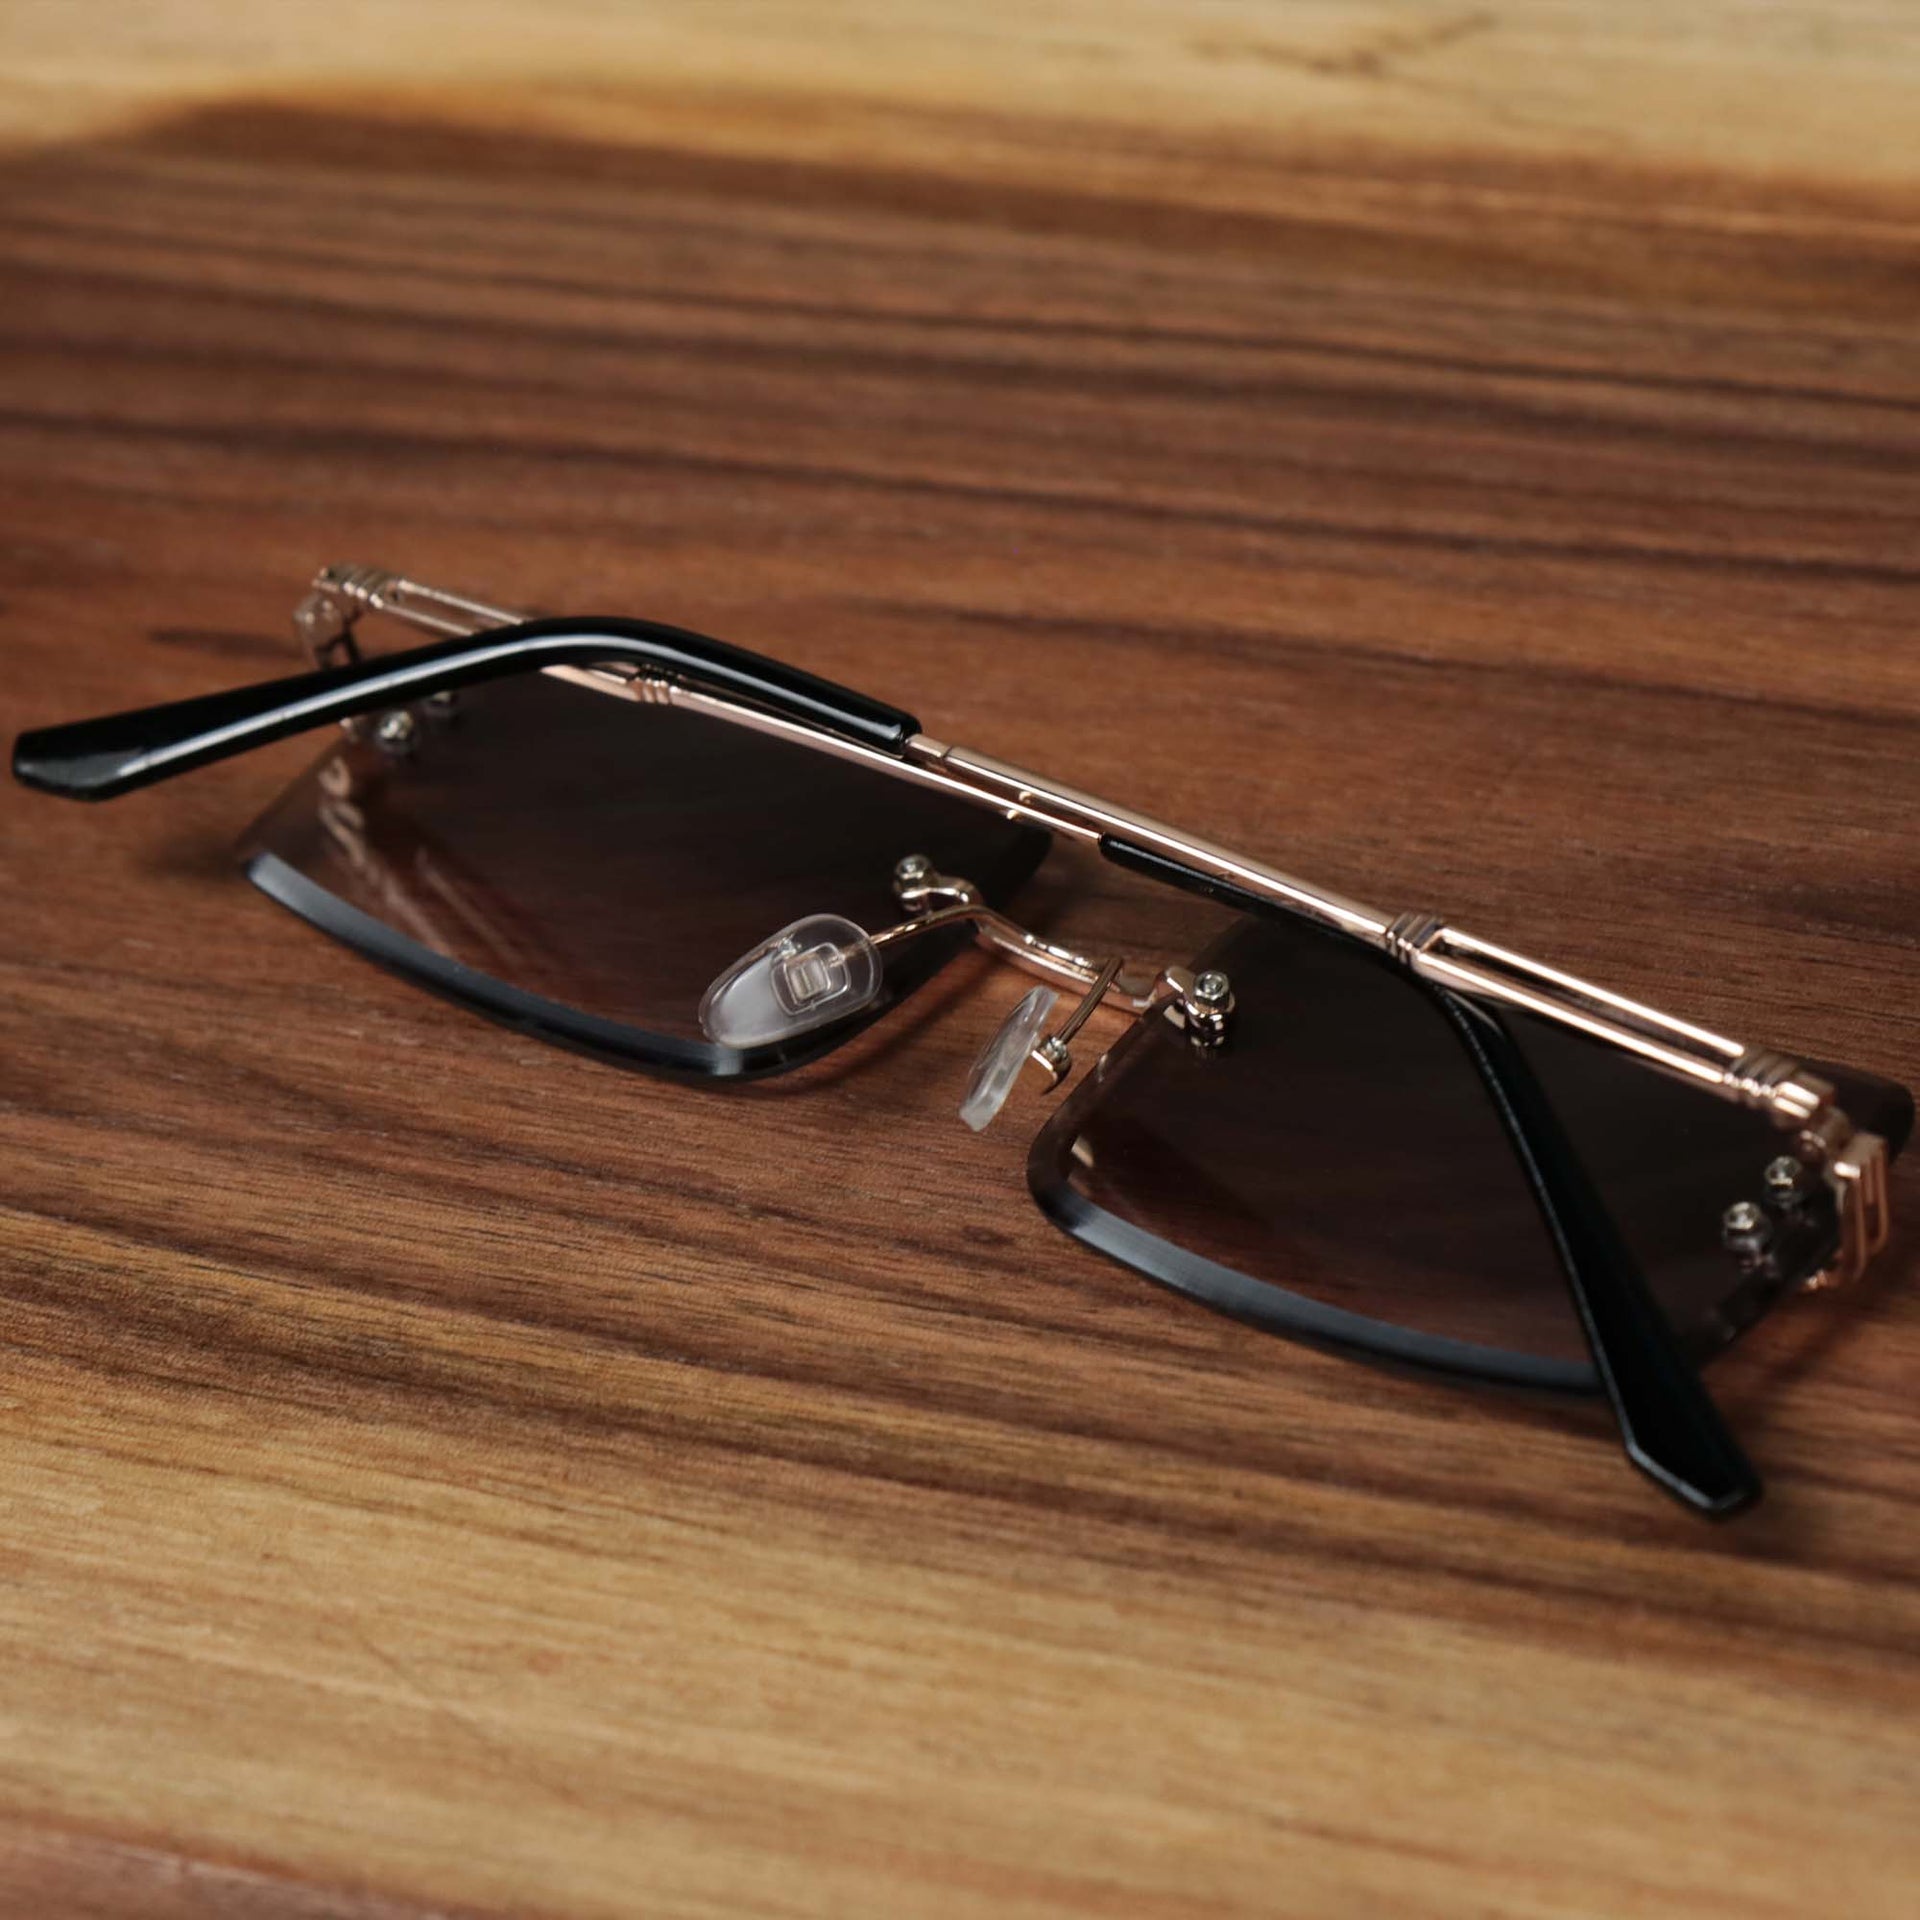 The Rectangle Frame Black Lens Sunglasses with Gold Frame folded up